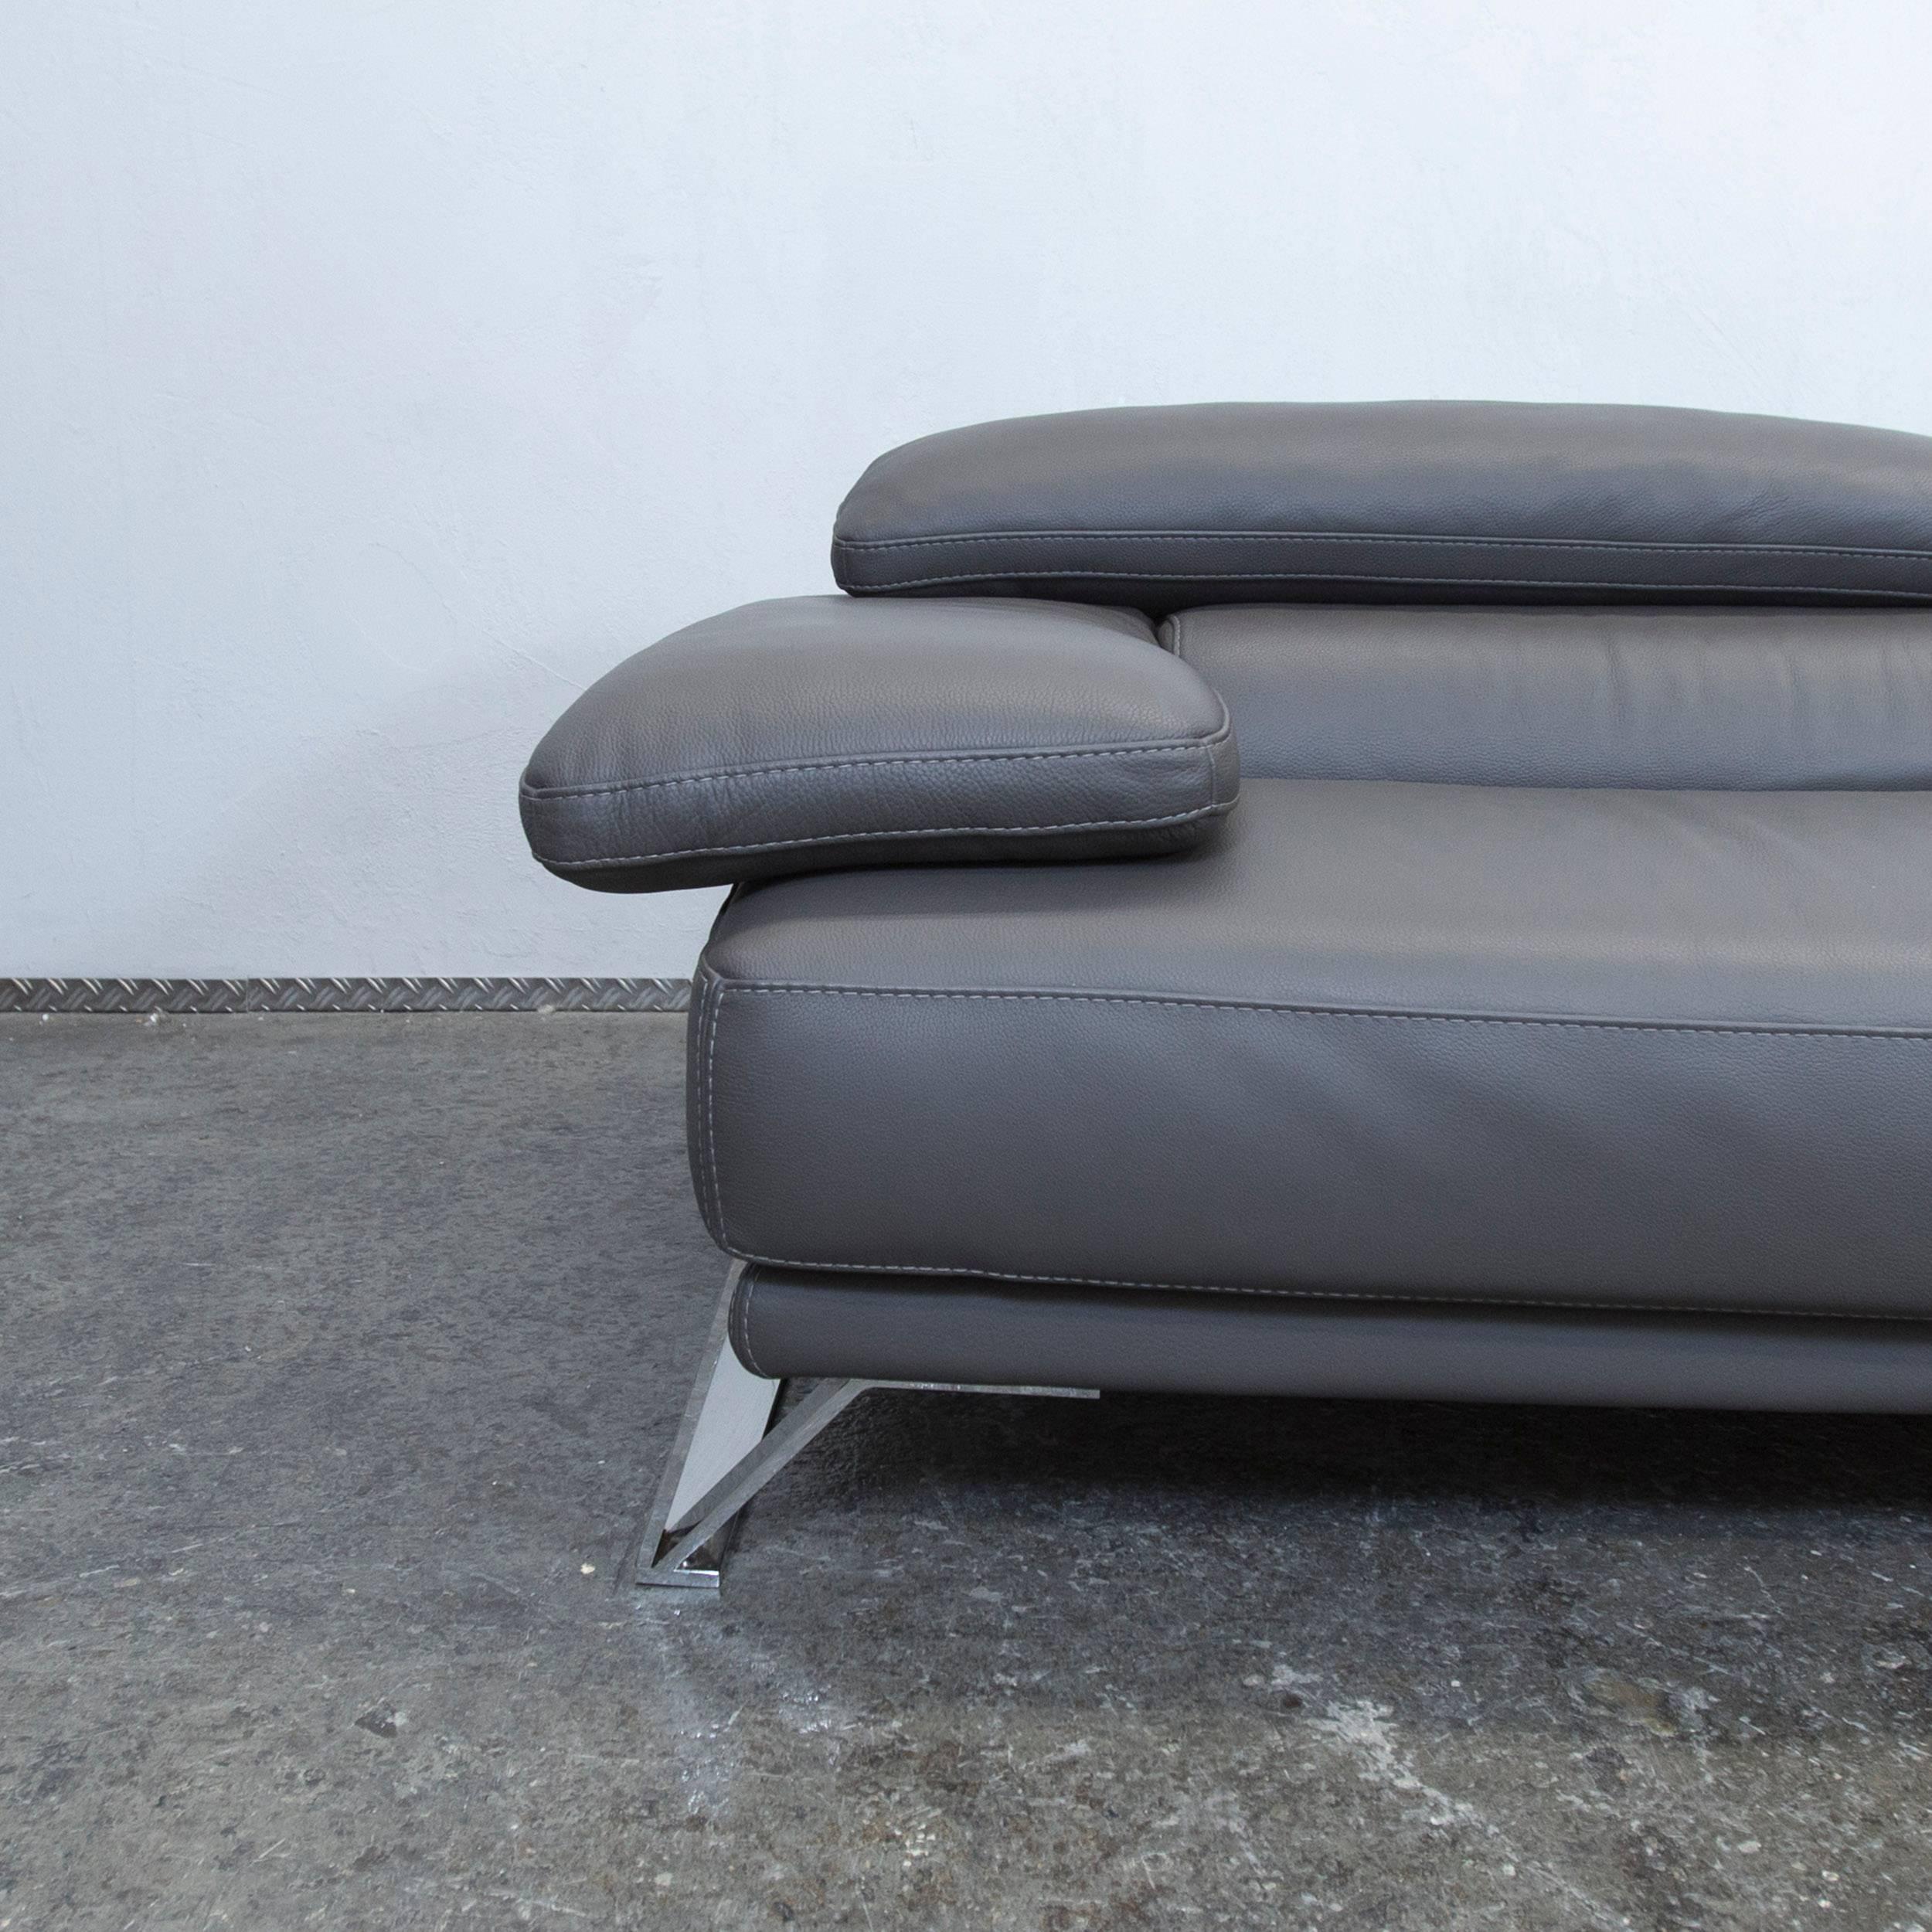 Grey colored original Roche Bobius designer leather sofa in a minimalistic and modern design, made for pure comfort and flexibility.